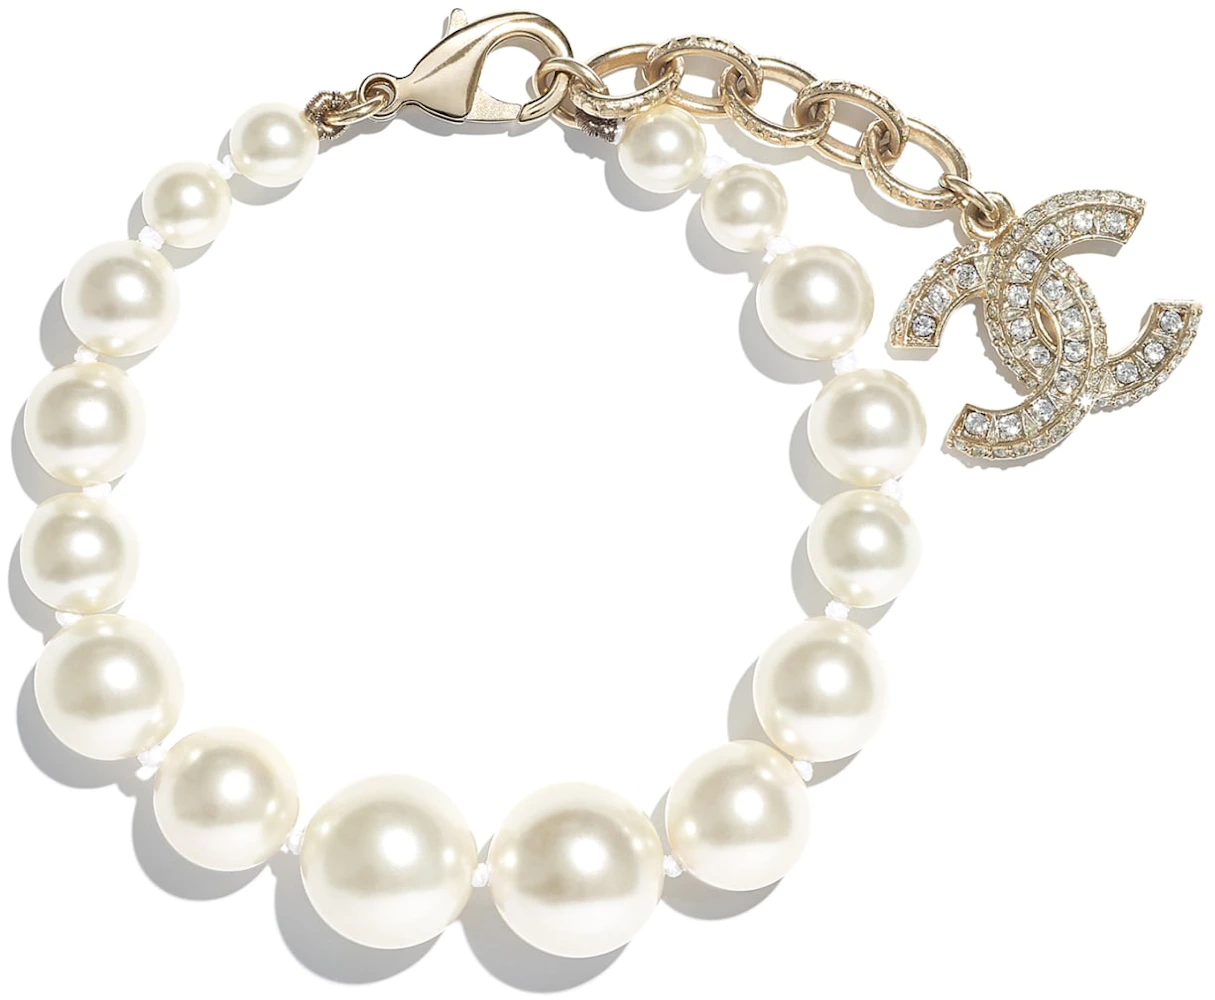 Chanel Interlocking Bracelet Gold/White/Crystal in Metal/Glass